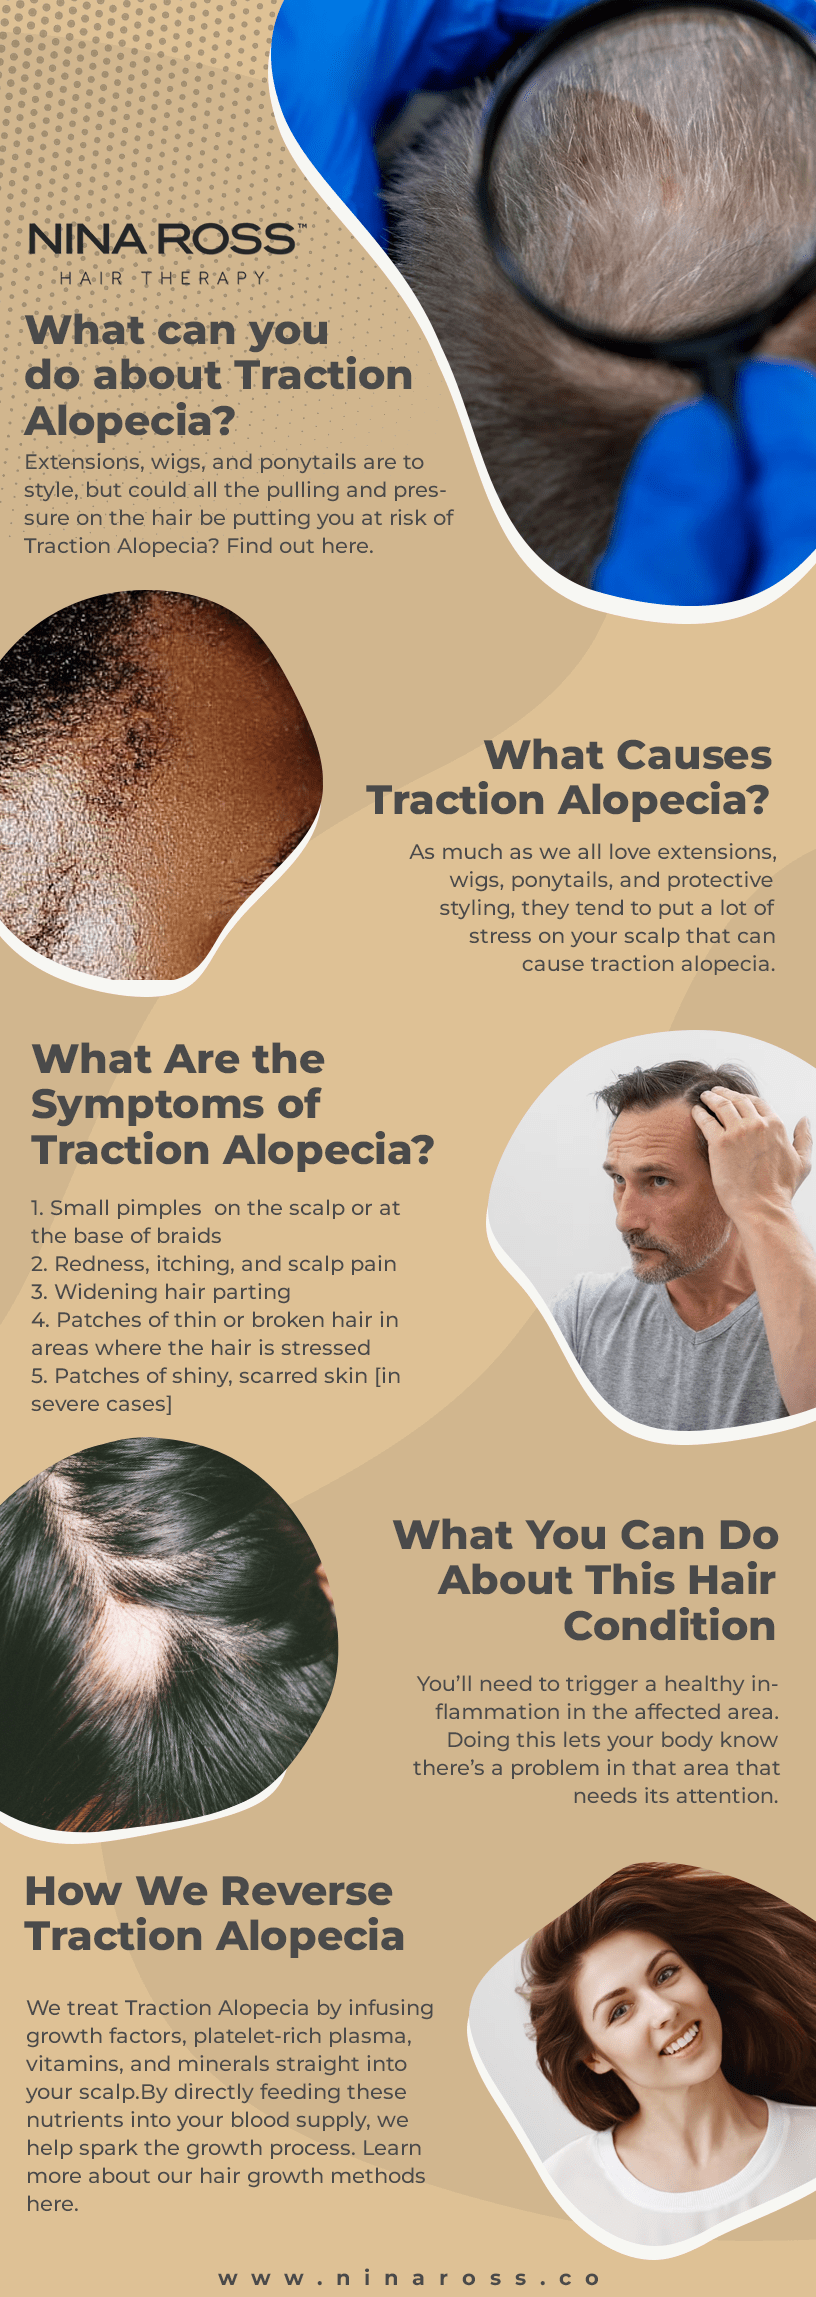 hairloss treatment hairgrowth healthyhair Traction Alopecia